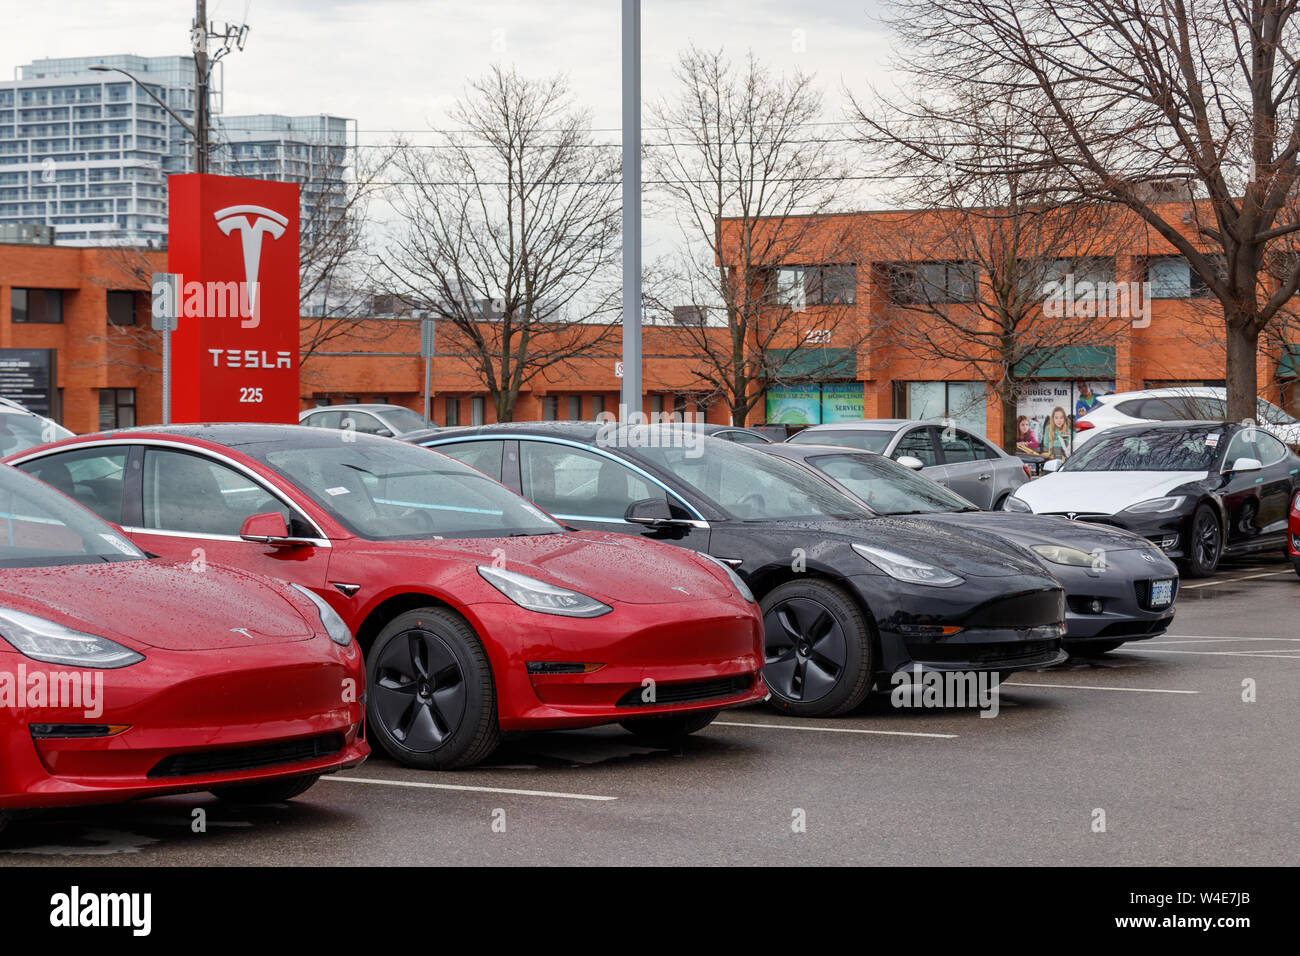 Tesla Model 3's at Tesla Dealership / Service Center in front of main gate sign. Stock Photo